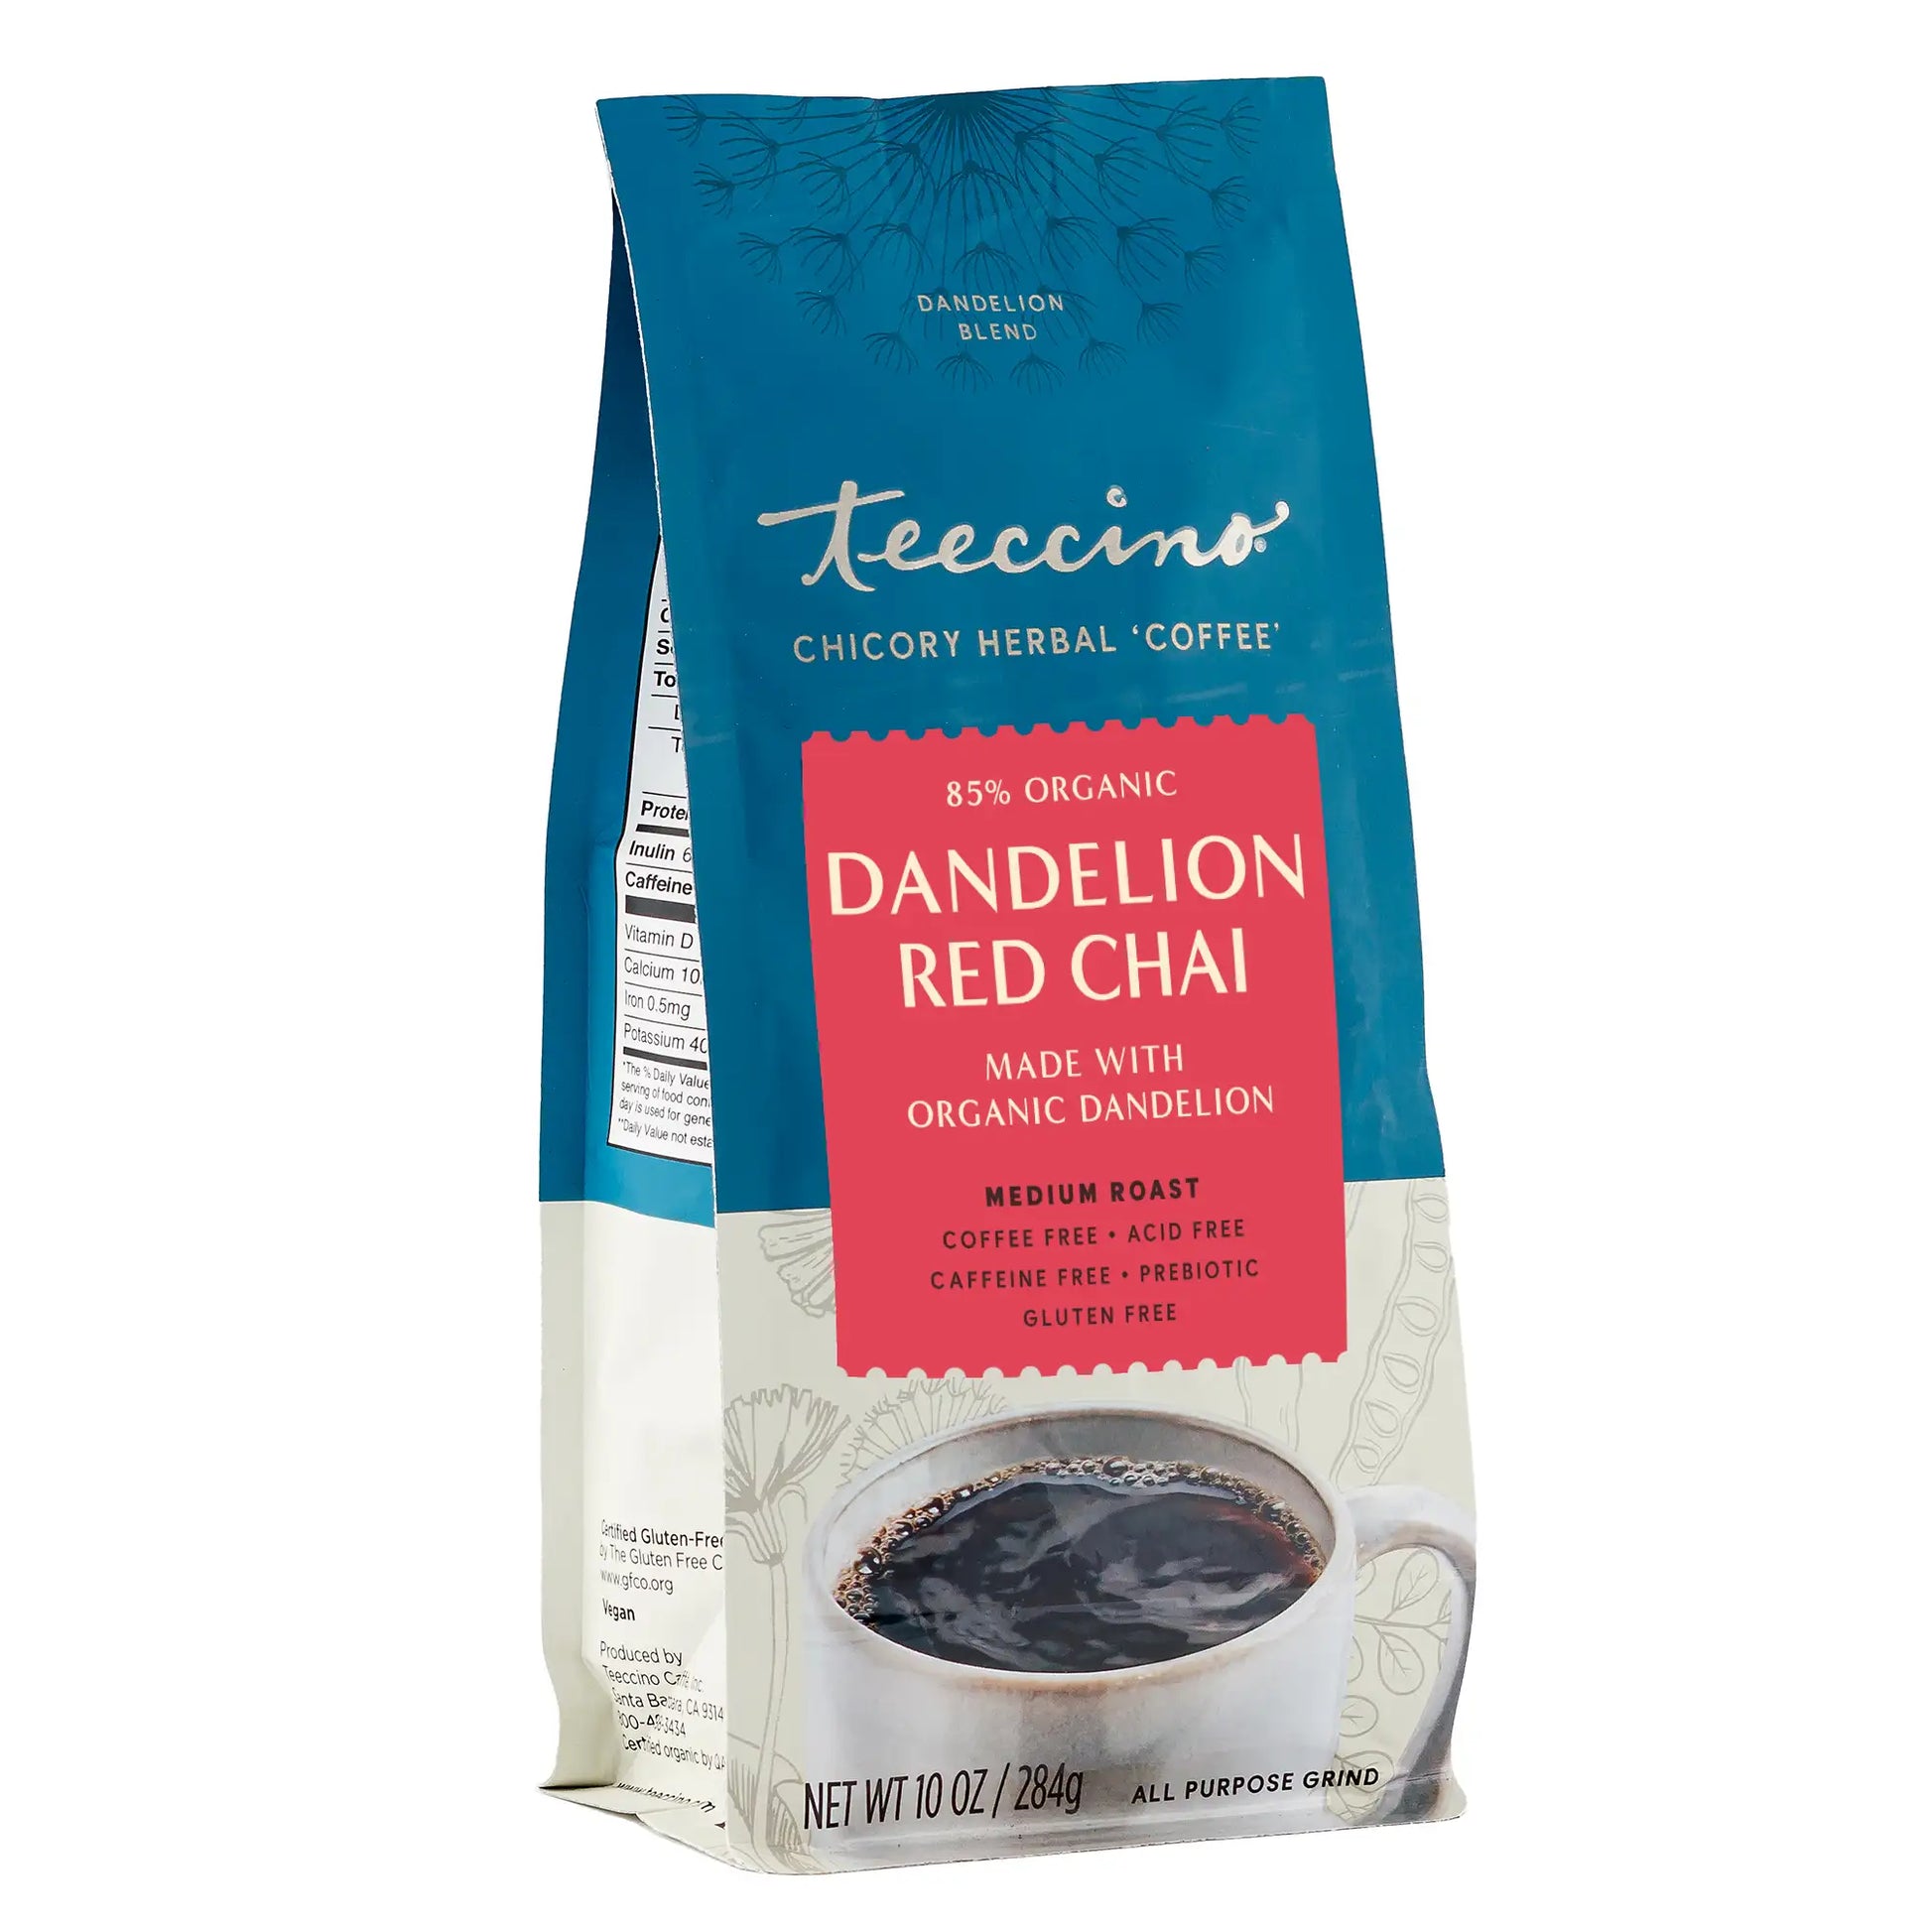 Dandelion Red Chai Herbal Coffee